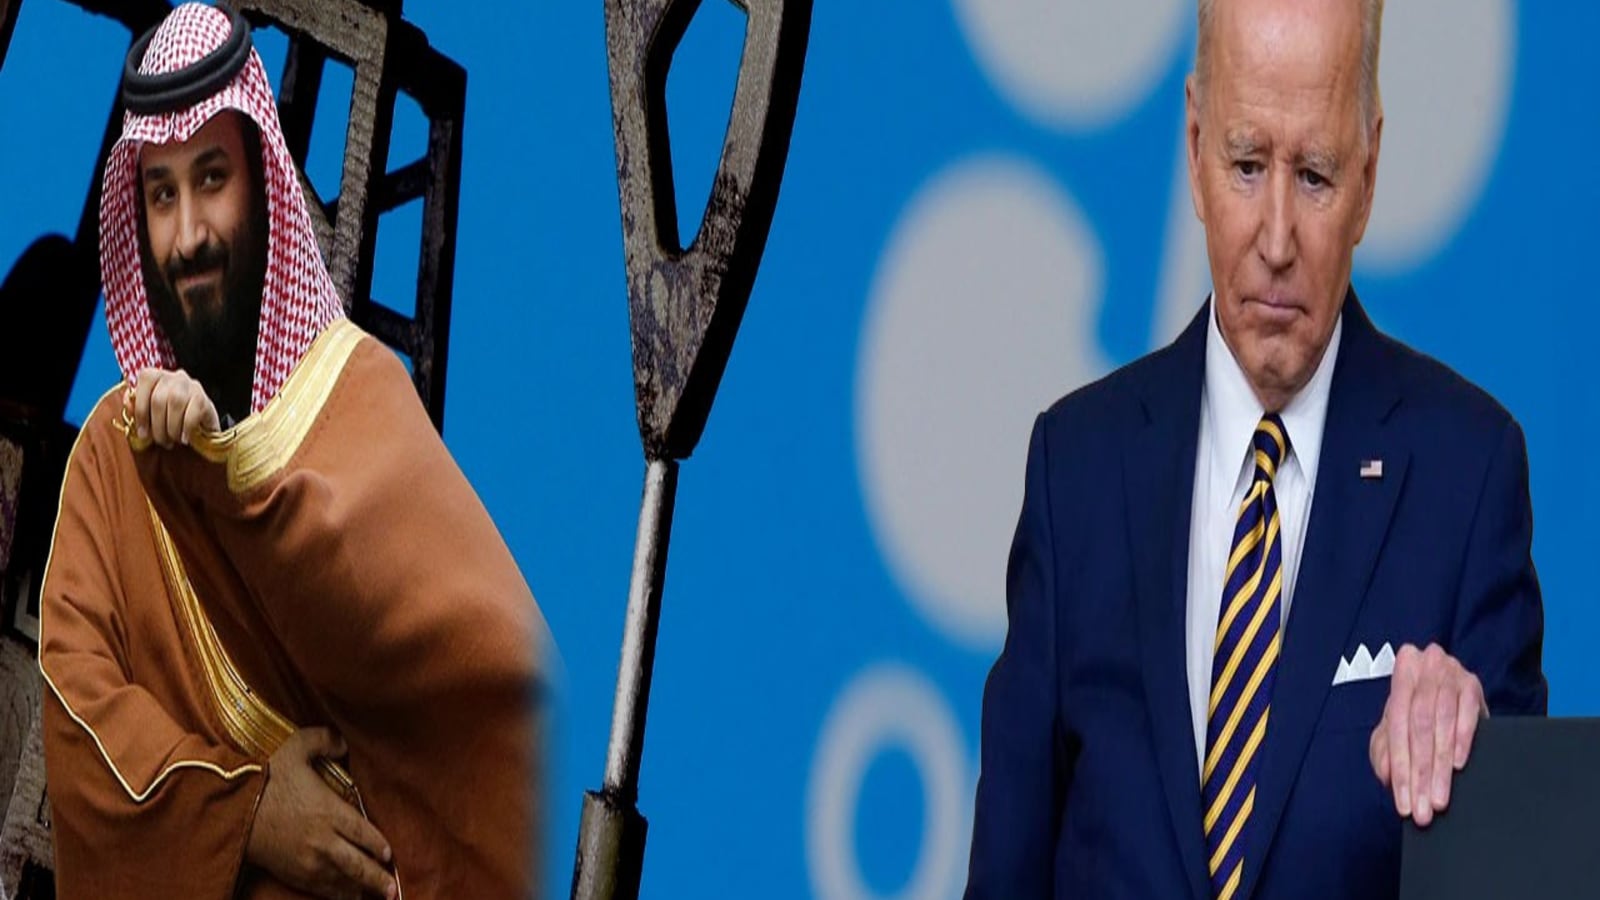 Joe Biden Concedes Defeat Before Crown Prince Mohammed Bin Salman